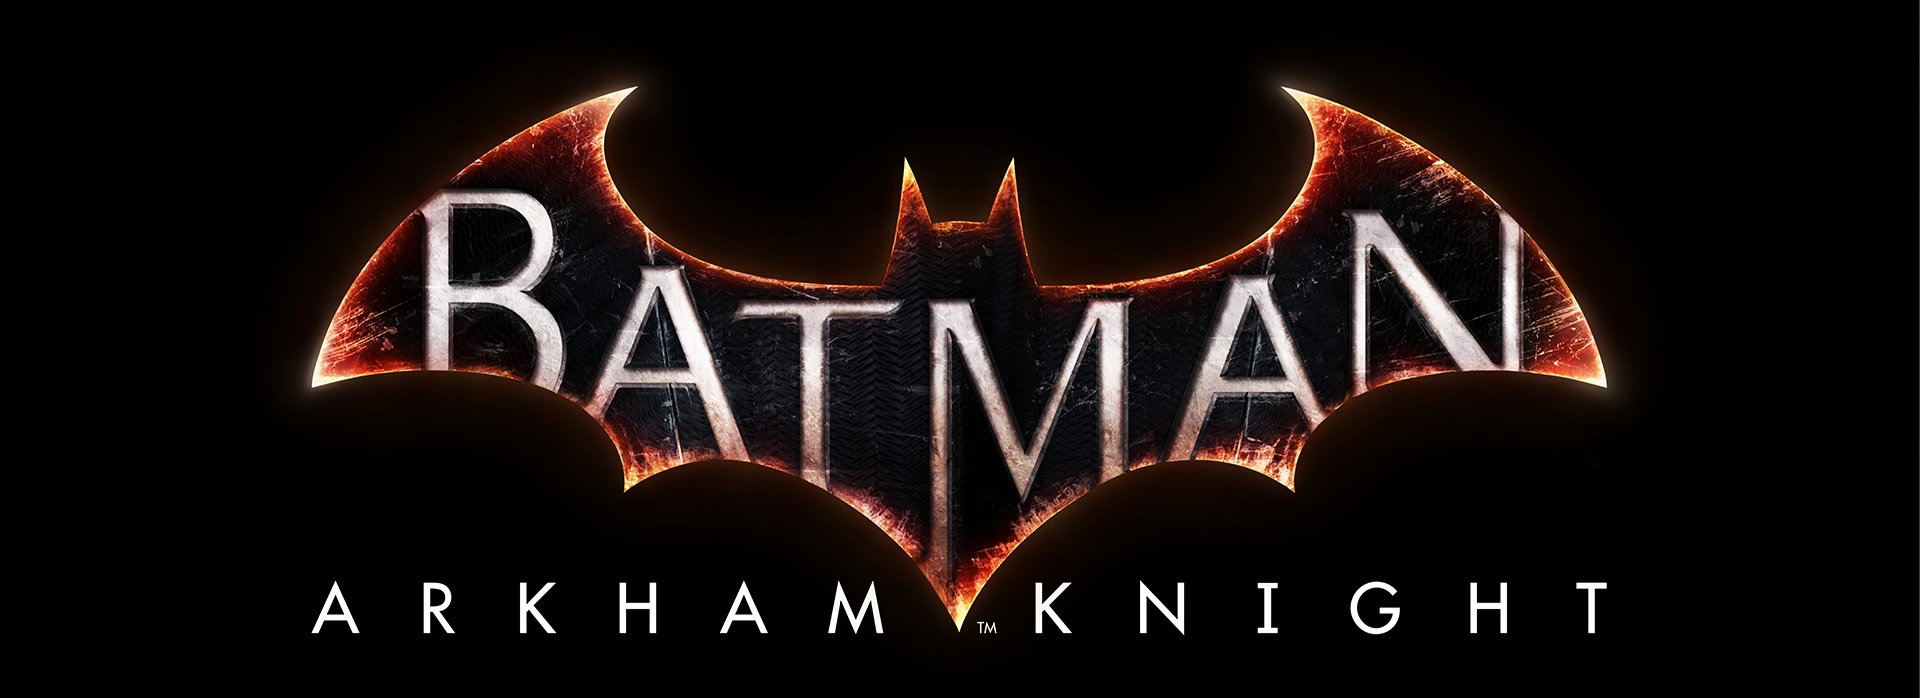 The Arkham Knight logo